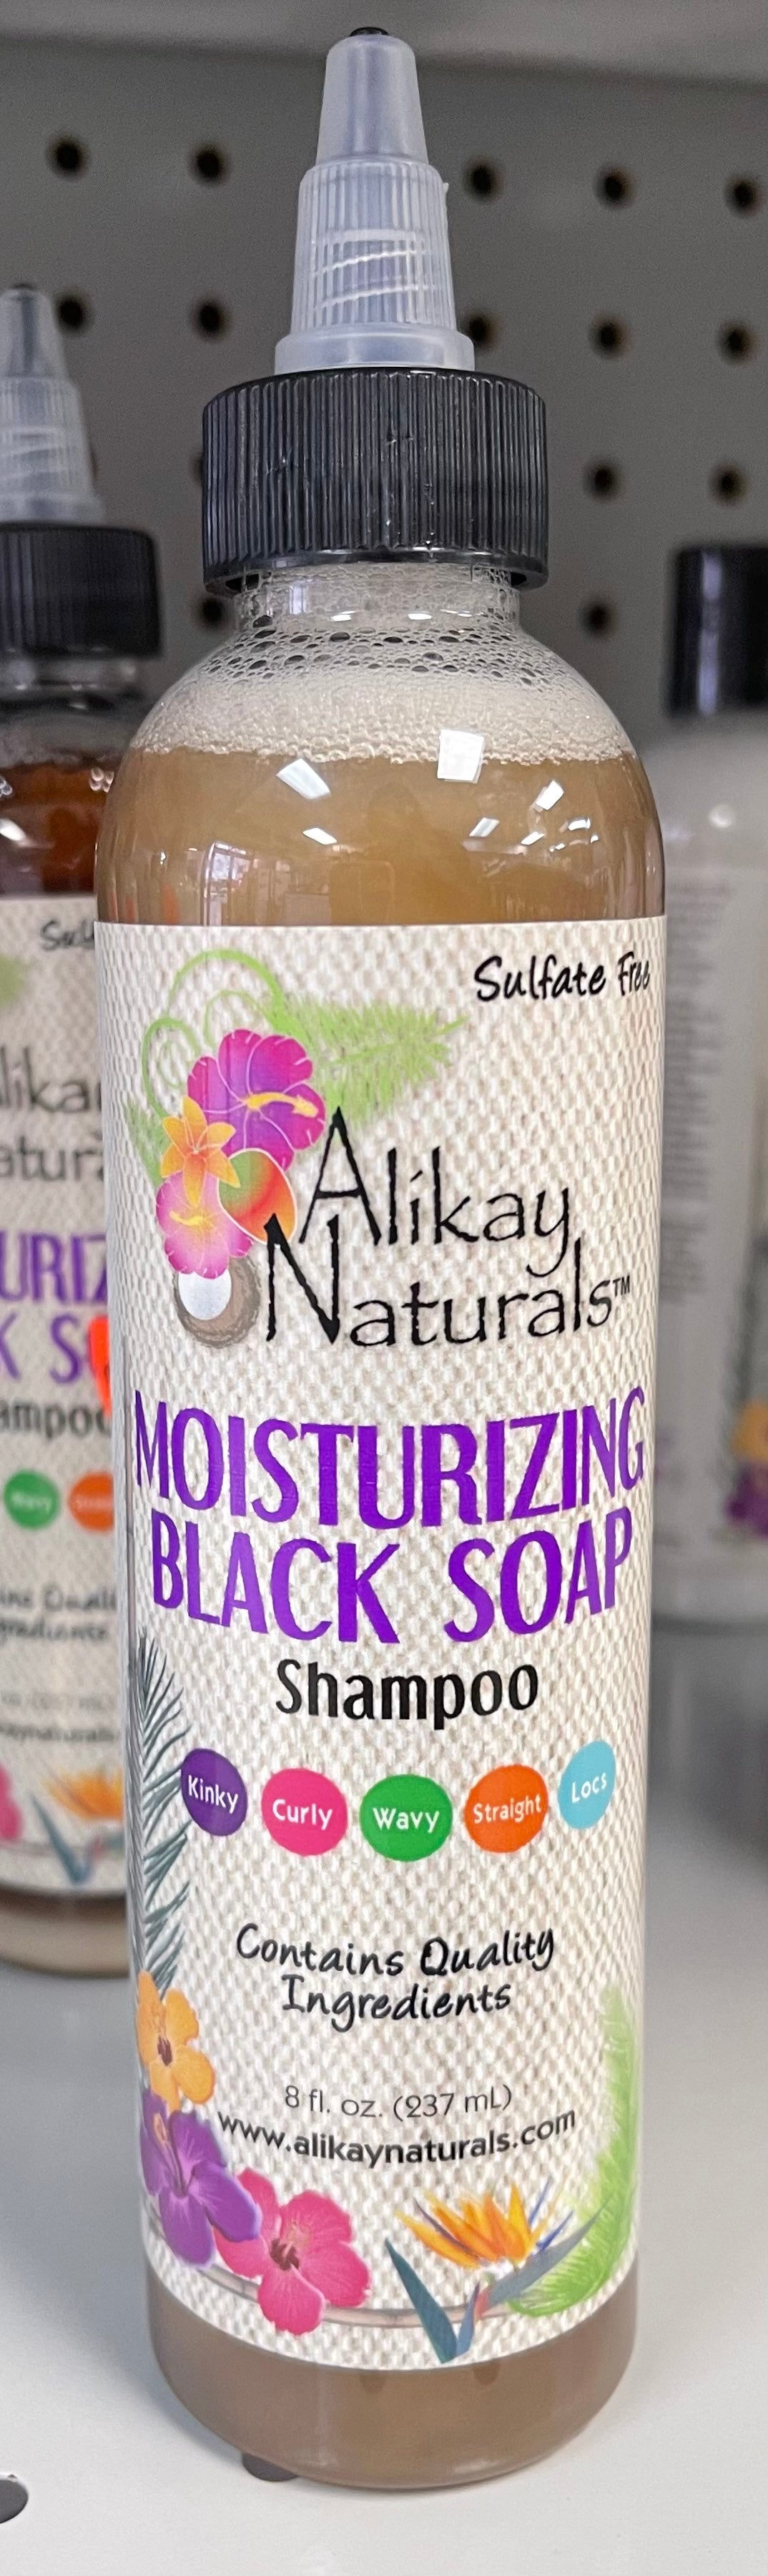 Alikay Naturals Moisturizing Black Soap